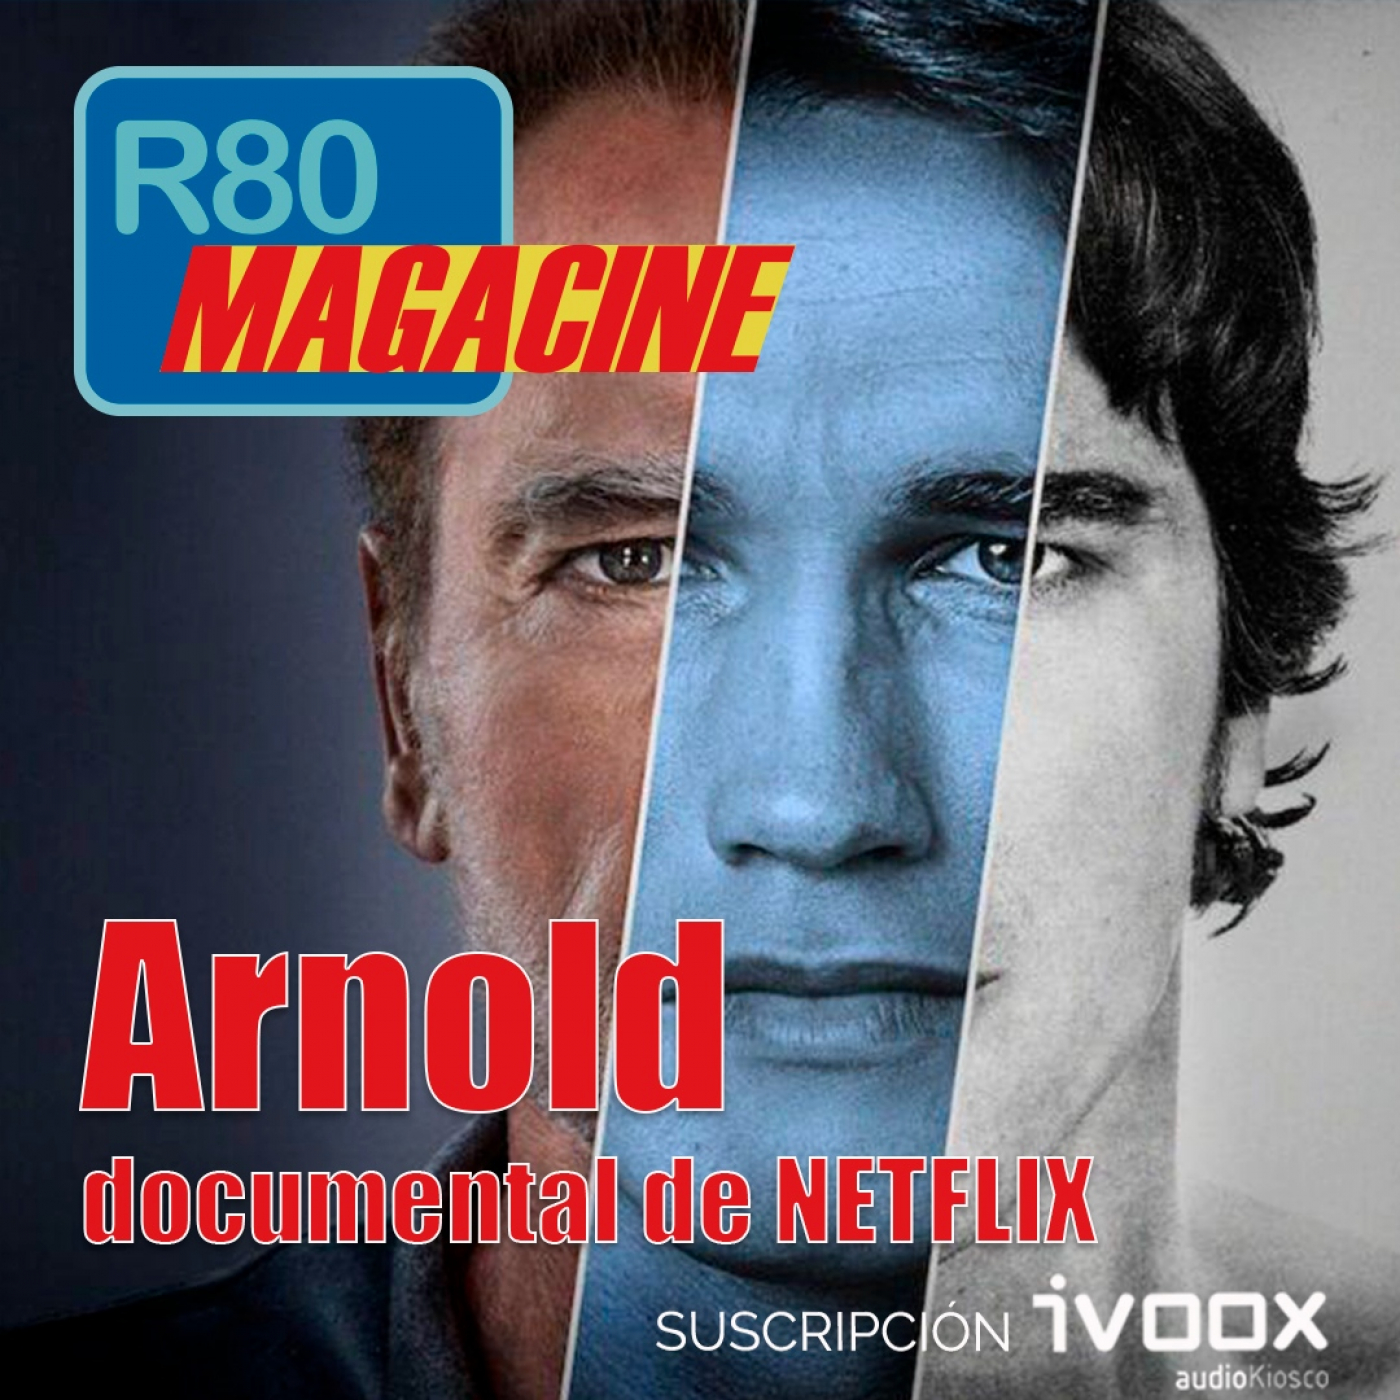 📰 R80 Magacine 🎙️: ARNOLD, el documental de NETFLIX sobre Arnold Schwarzenegger – Episodio exclusivo para mecenas